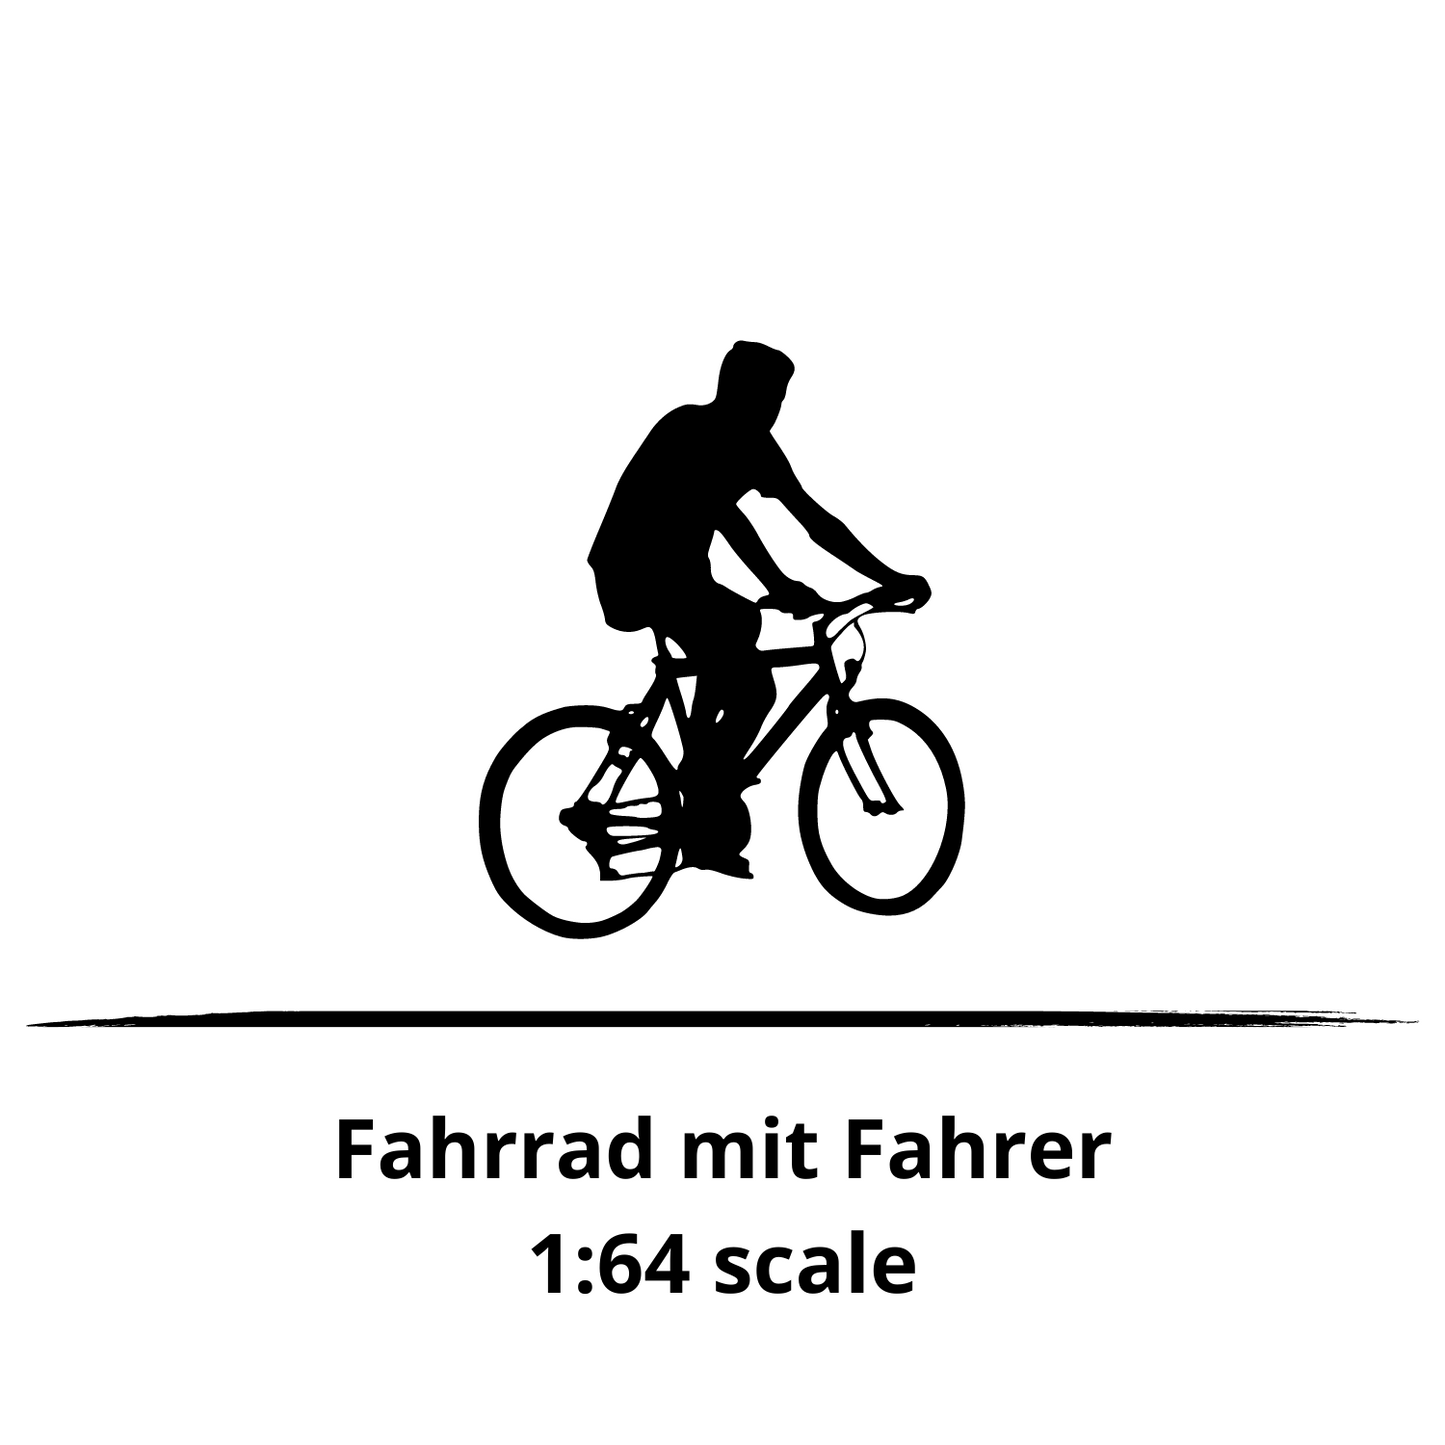 1:64 bike with rider